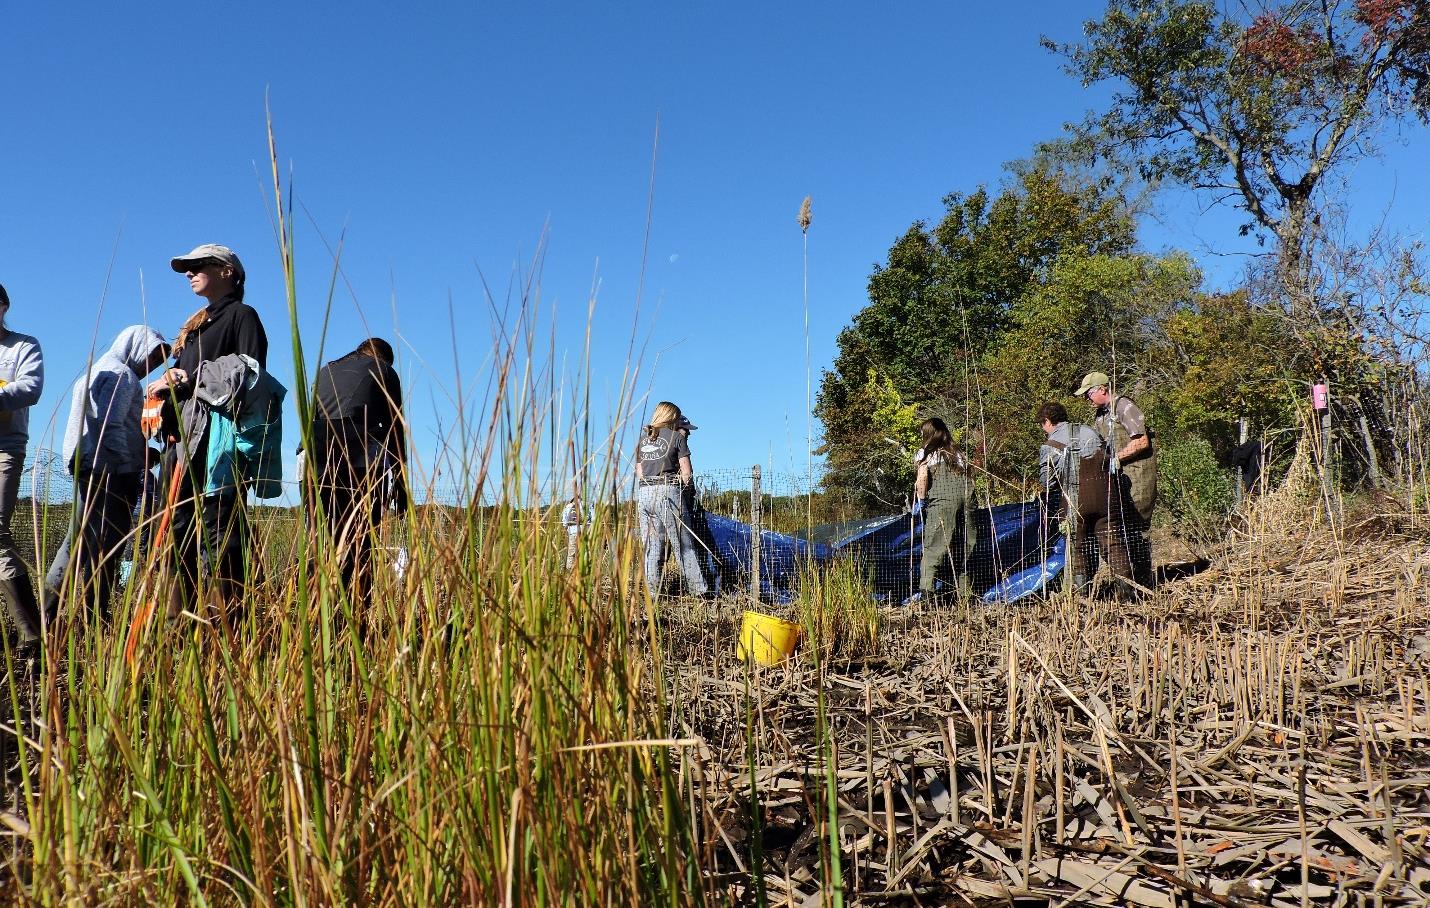 Volunteers removing invasive Phragmites australis and planting native Spartina alterniflora.